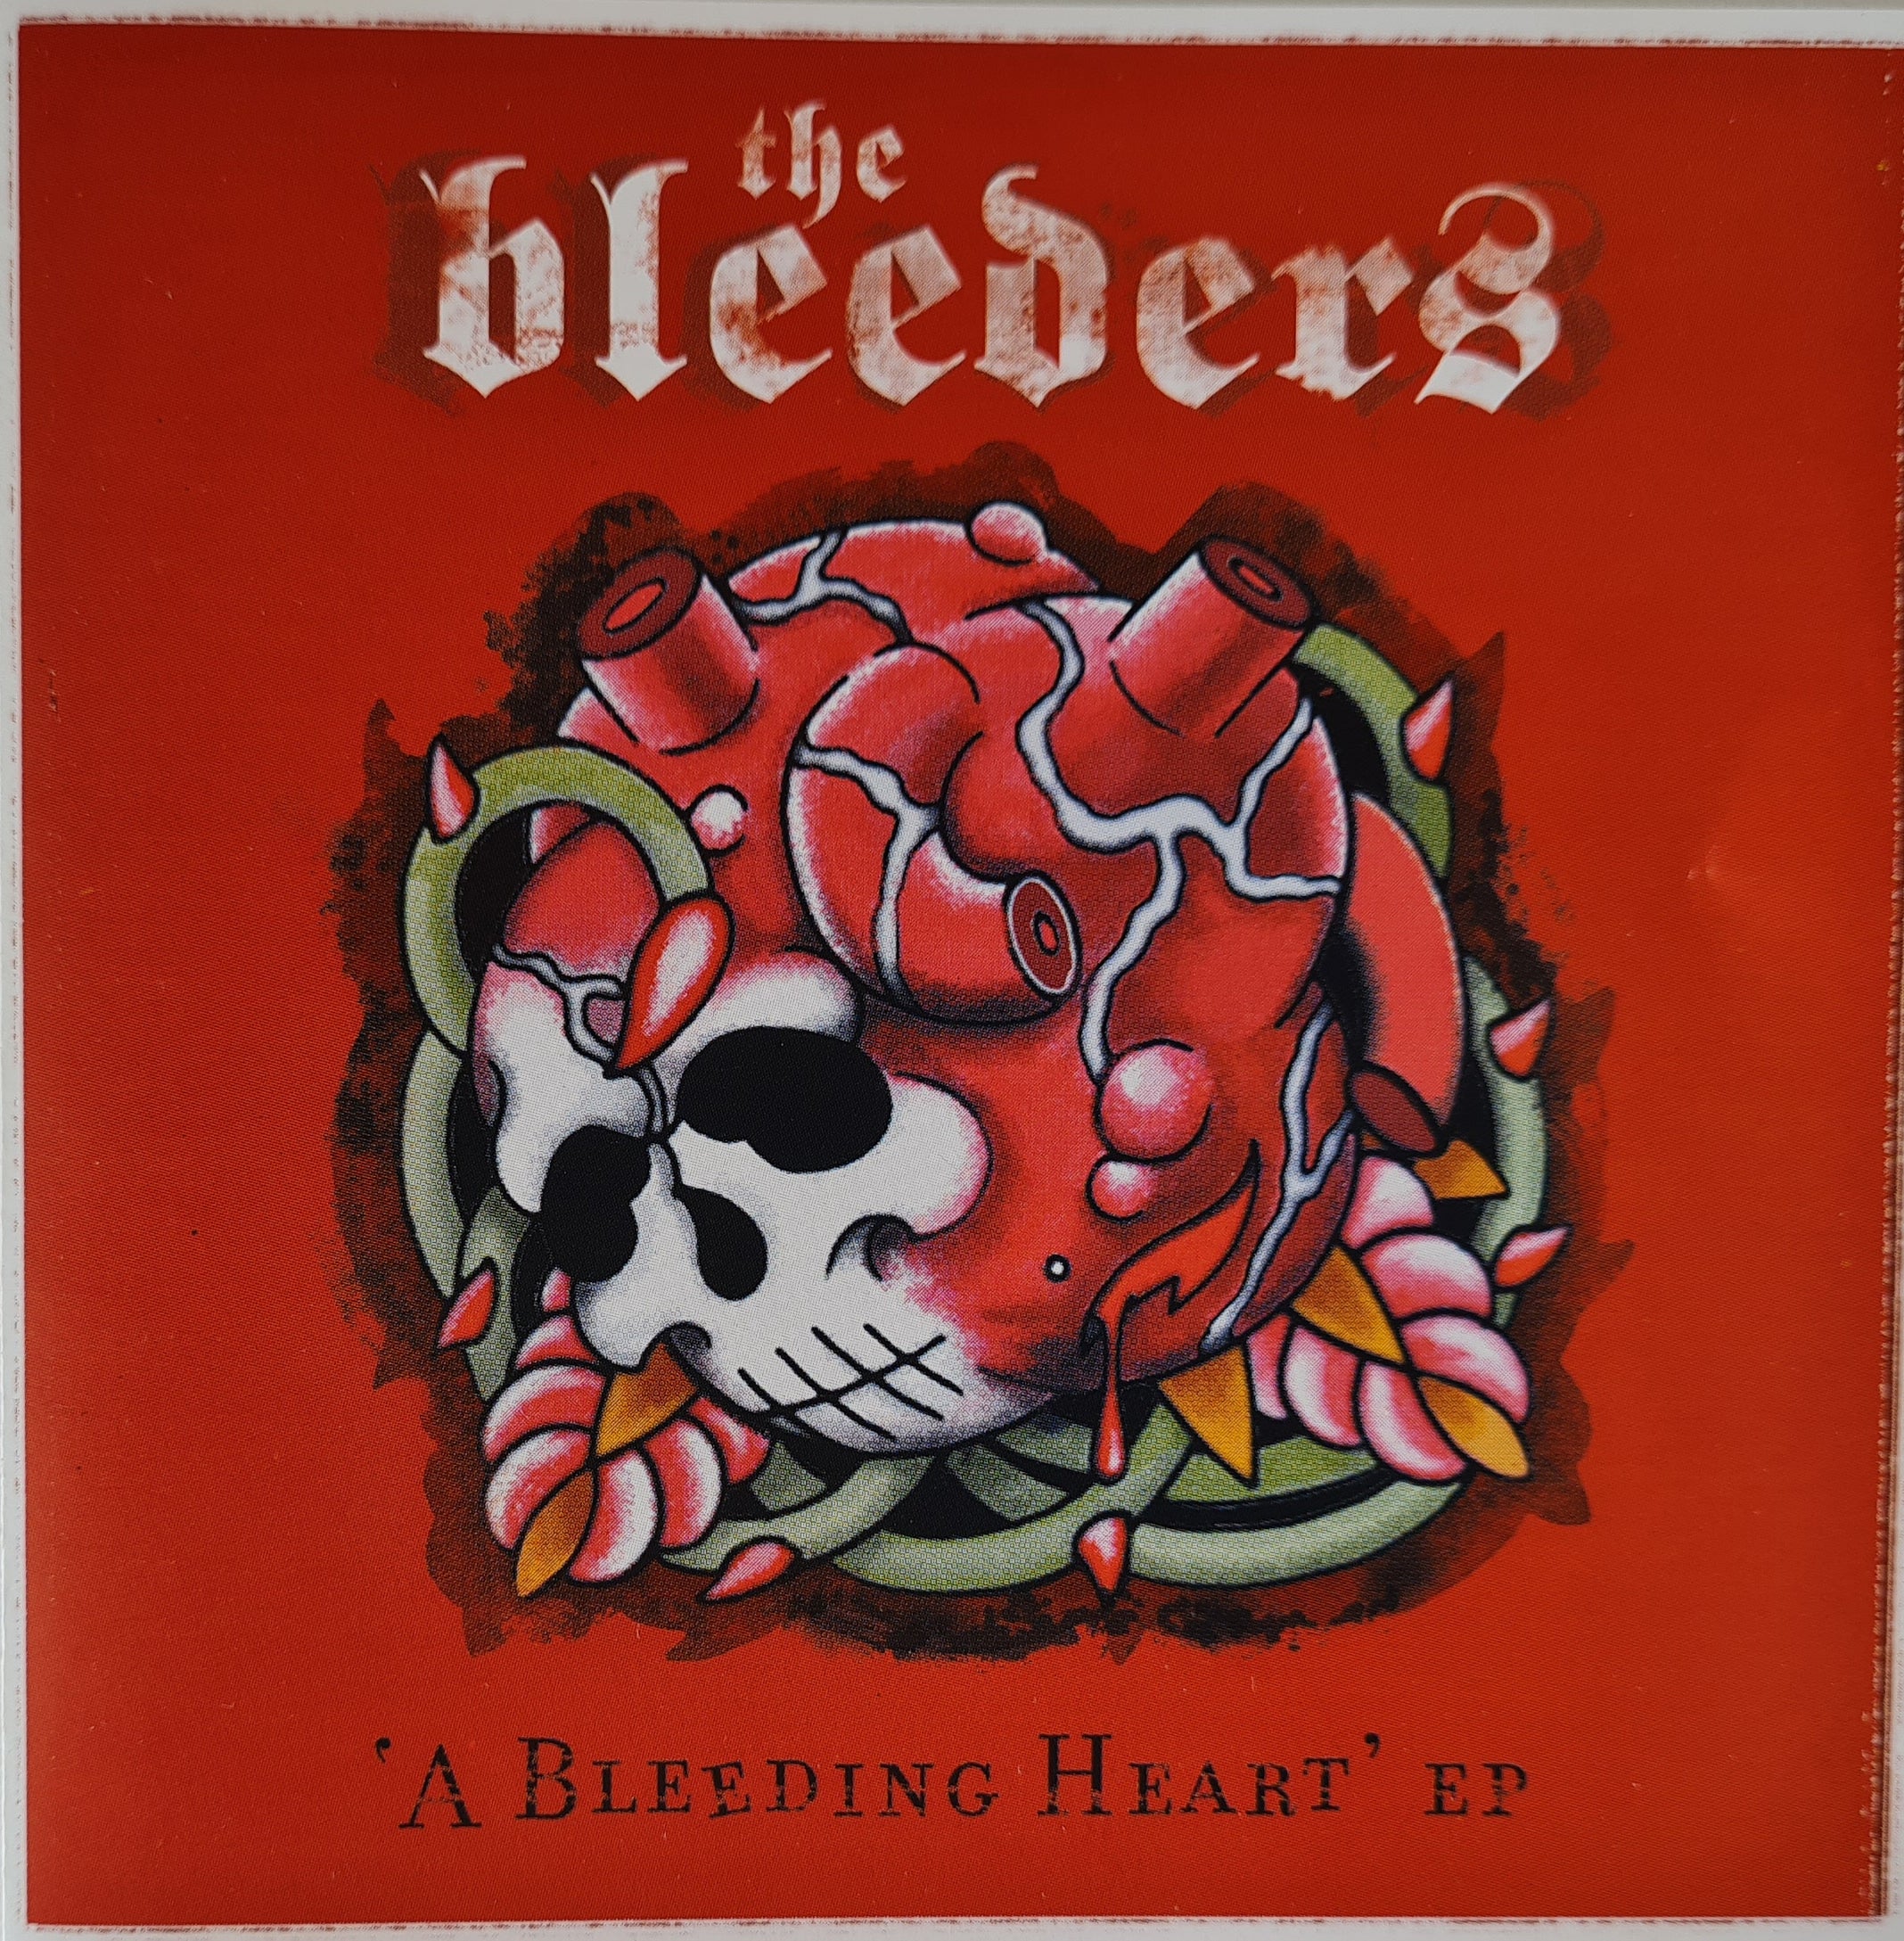 The Bleeders - A Bleeding Heart E.P. (CD)